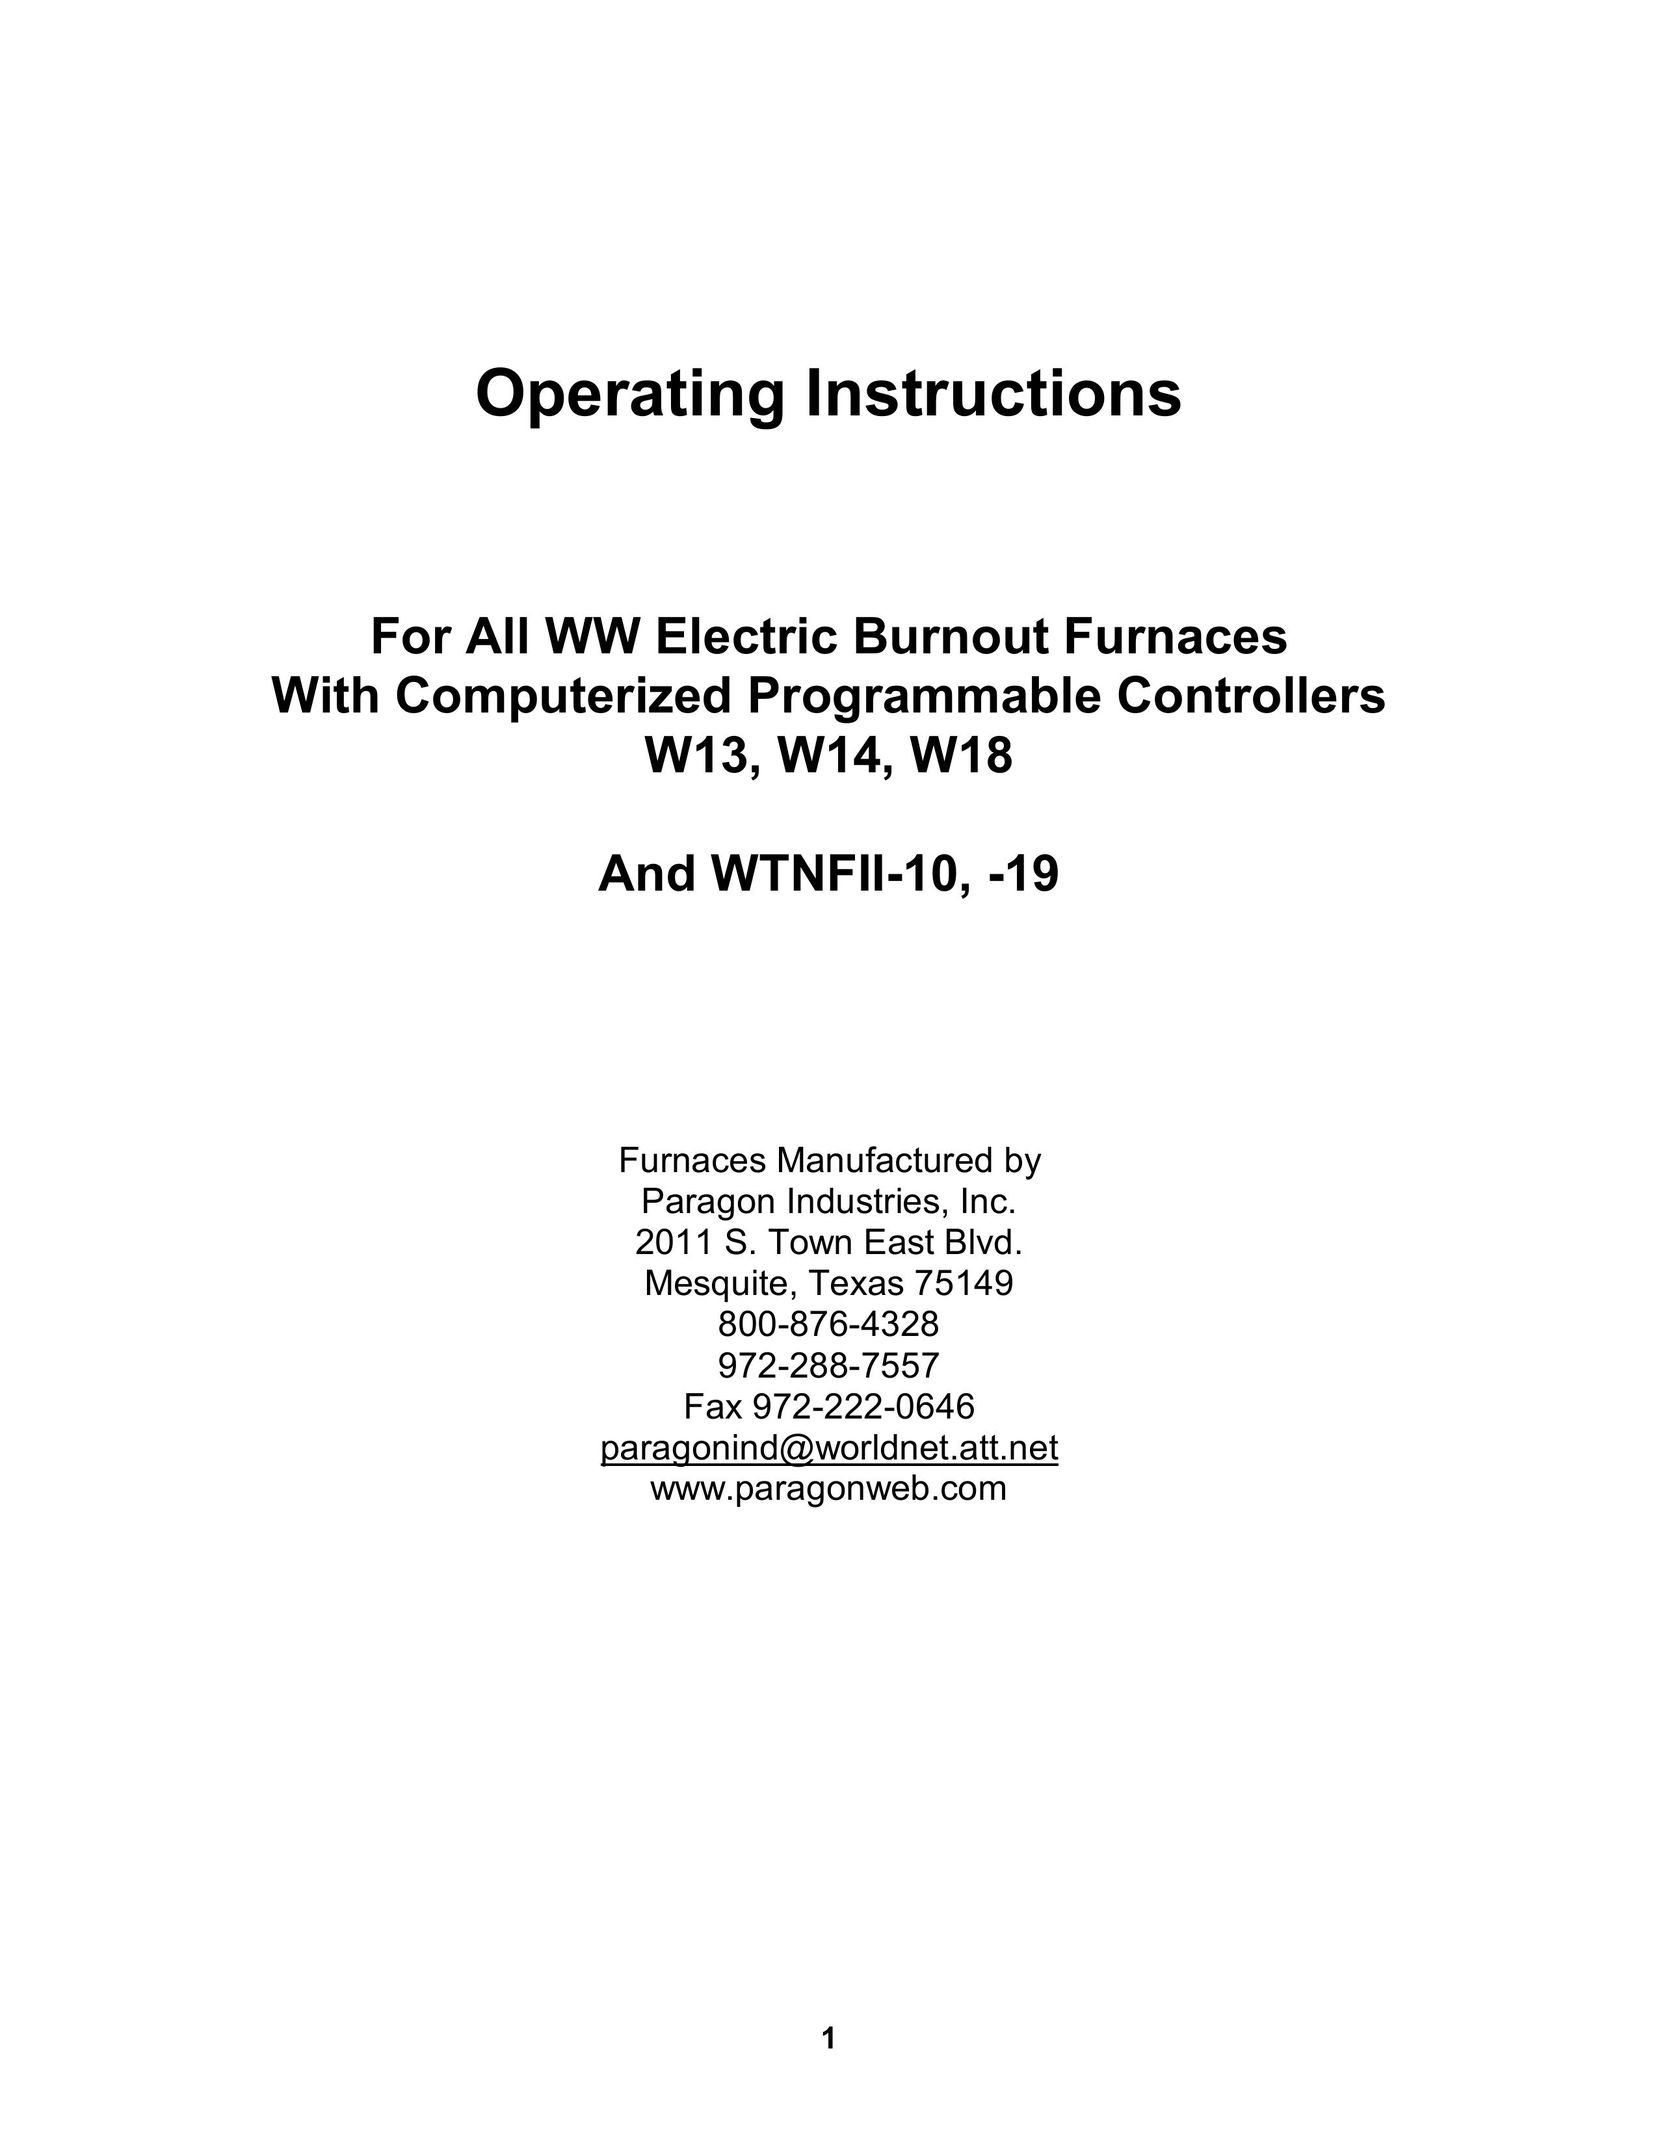 Paragon W13 Furnace User Manual